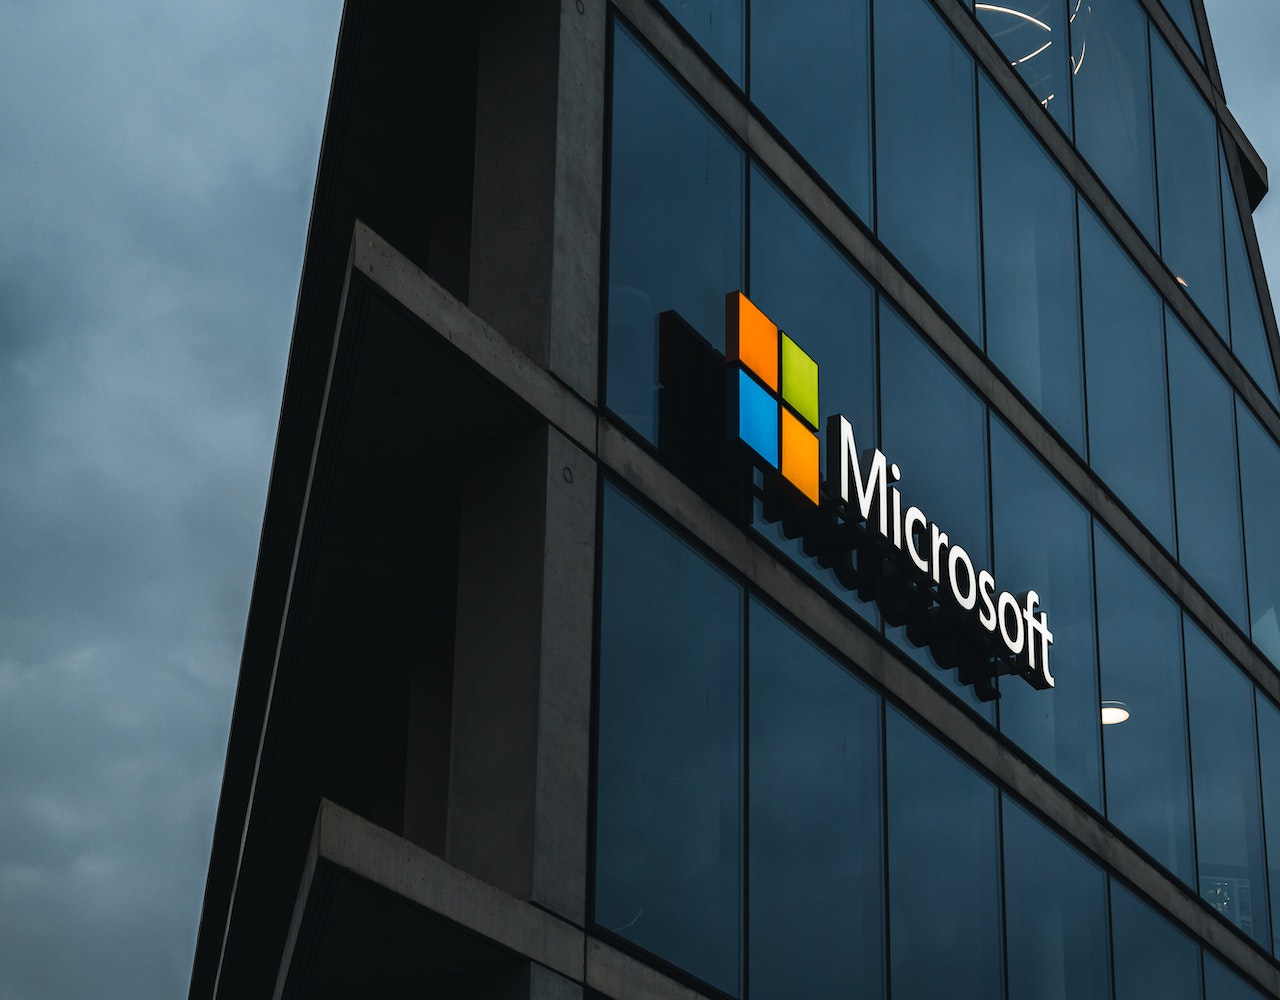 Microsoft Hires Sam Altman and Greg Brockman to Lead New AI Research Team at Microsoft